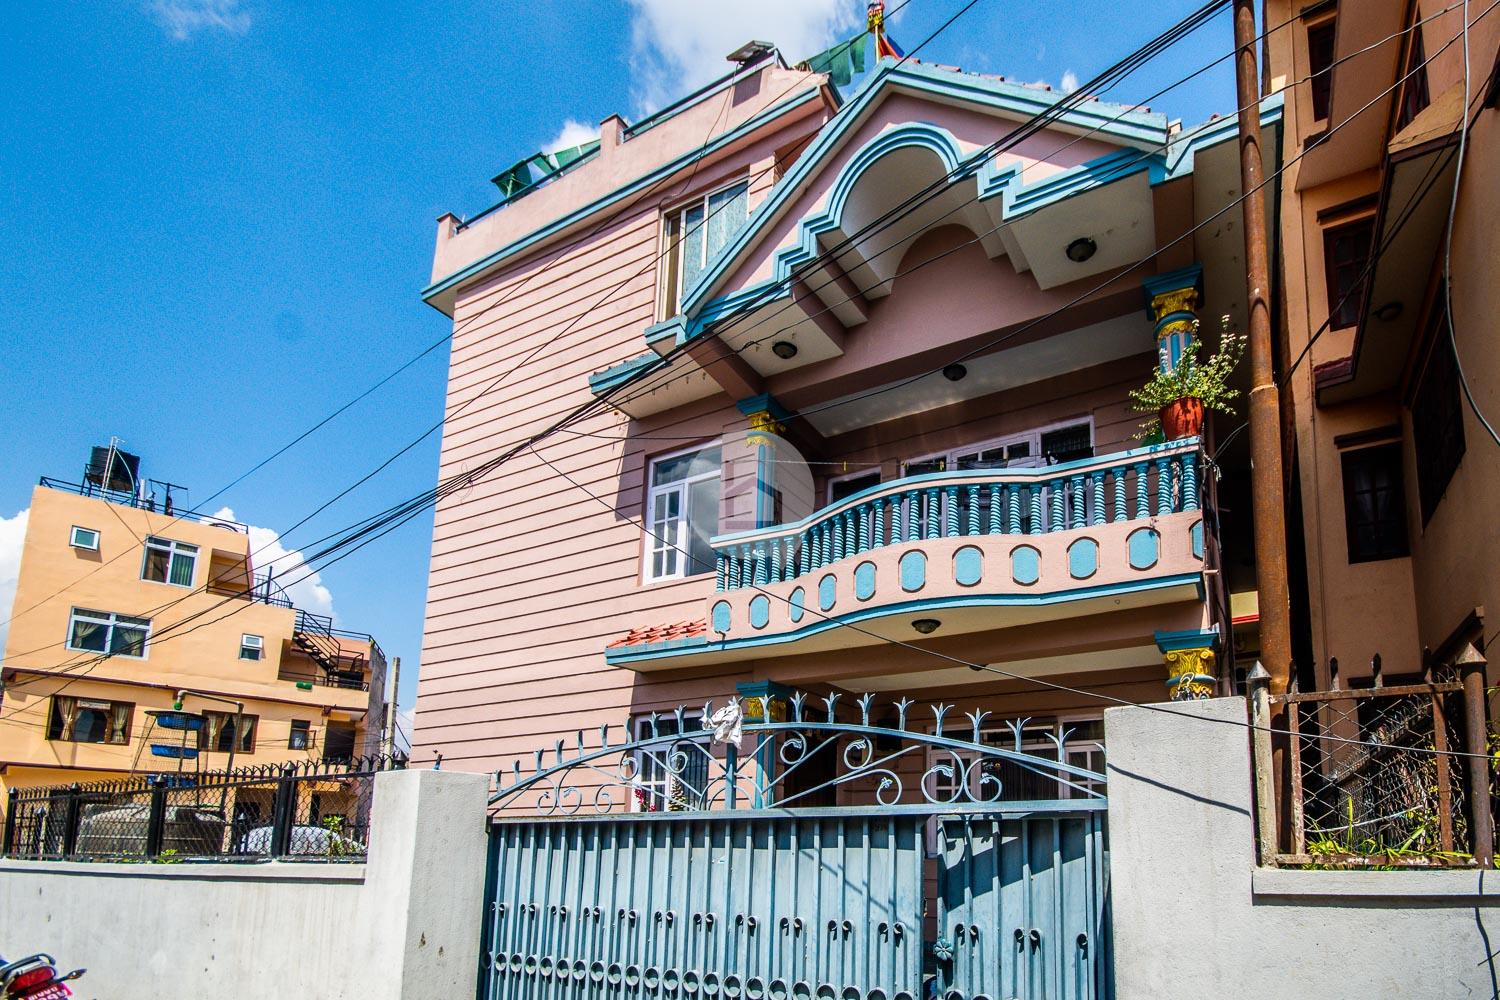 Residential House sale : House for Sale in Sukedhara, Kathmandu Image 1